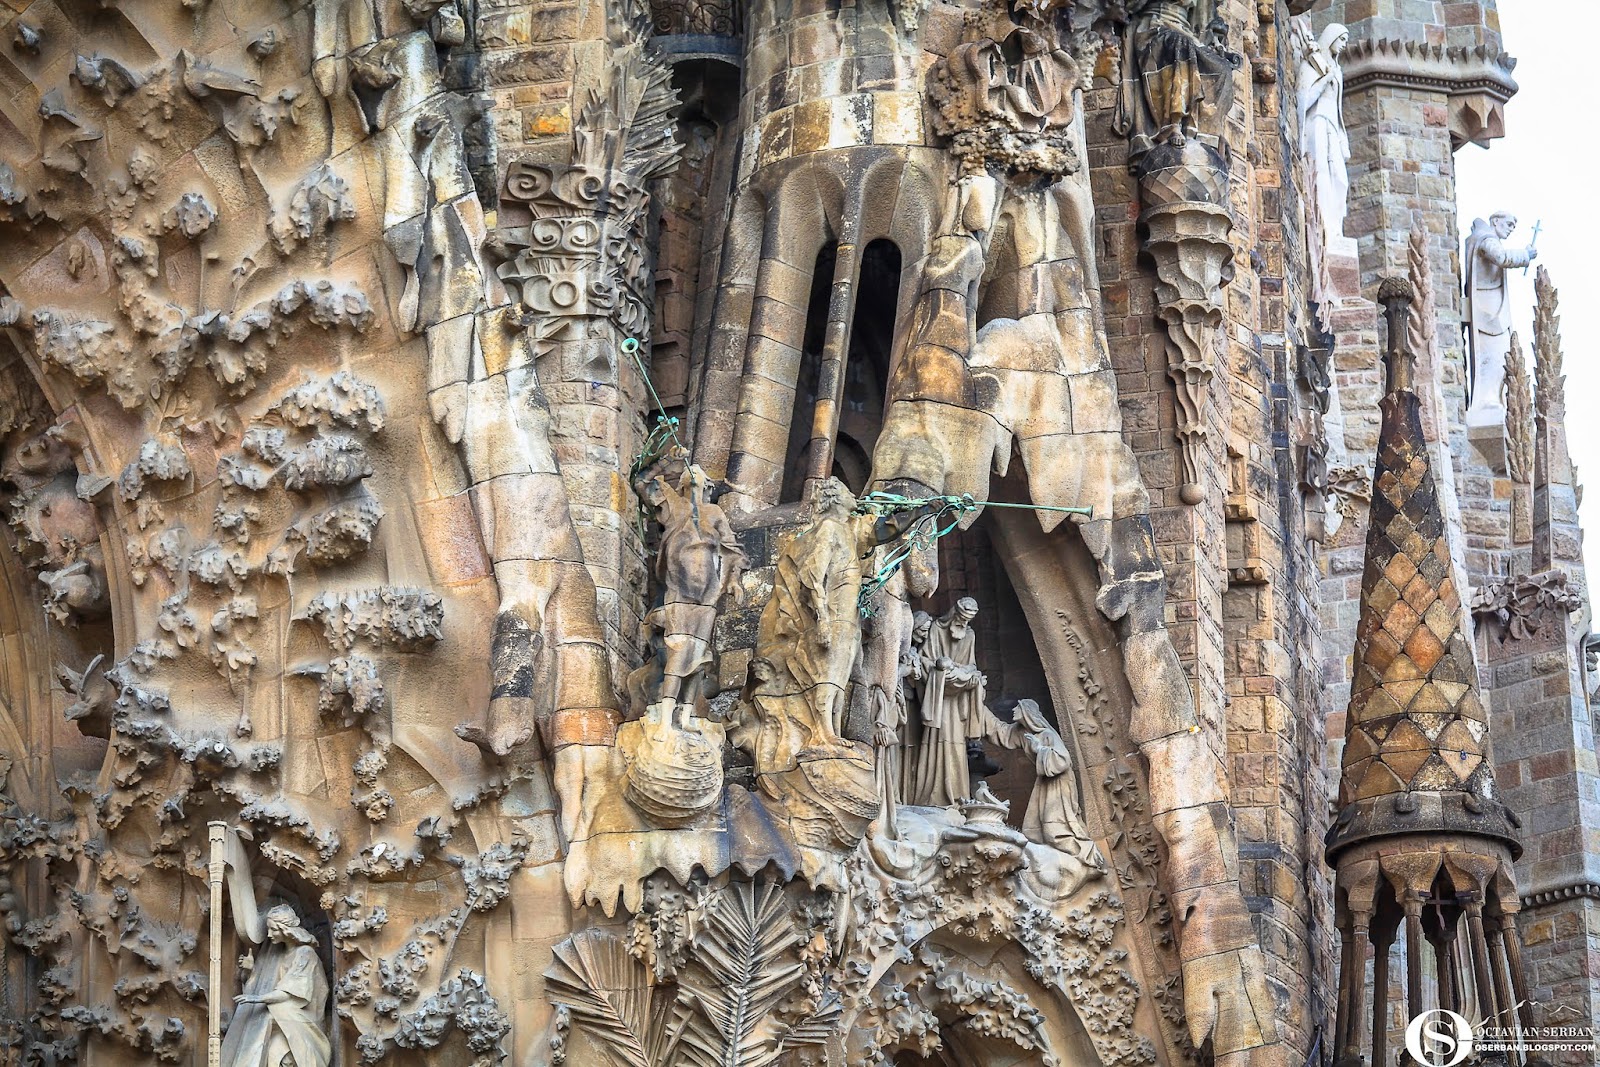 Octavian Serban: Sagrada Familia part 2/3 - Nativity Façade